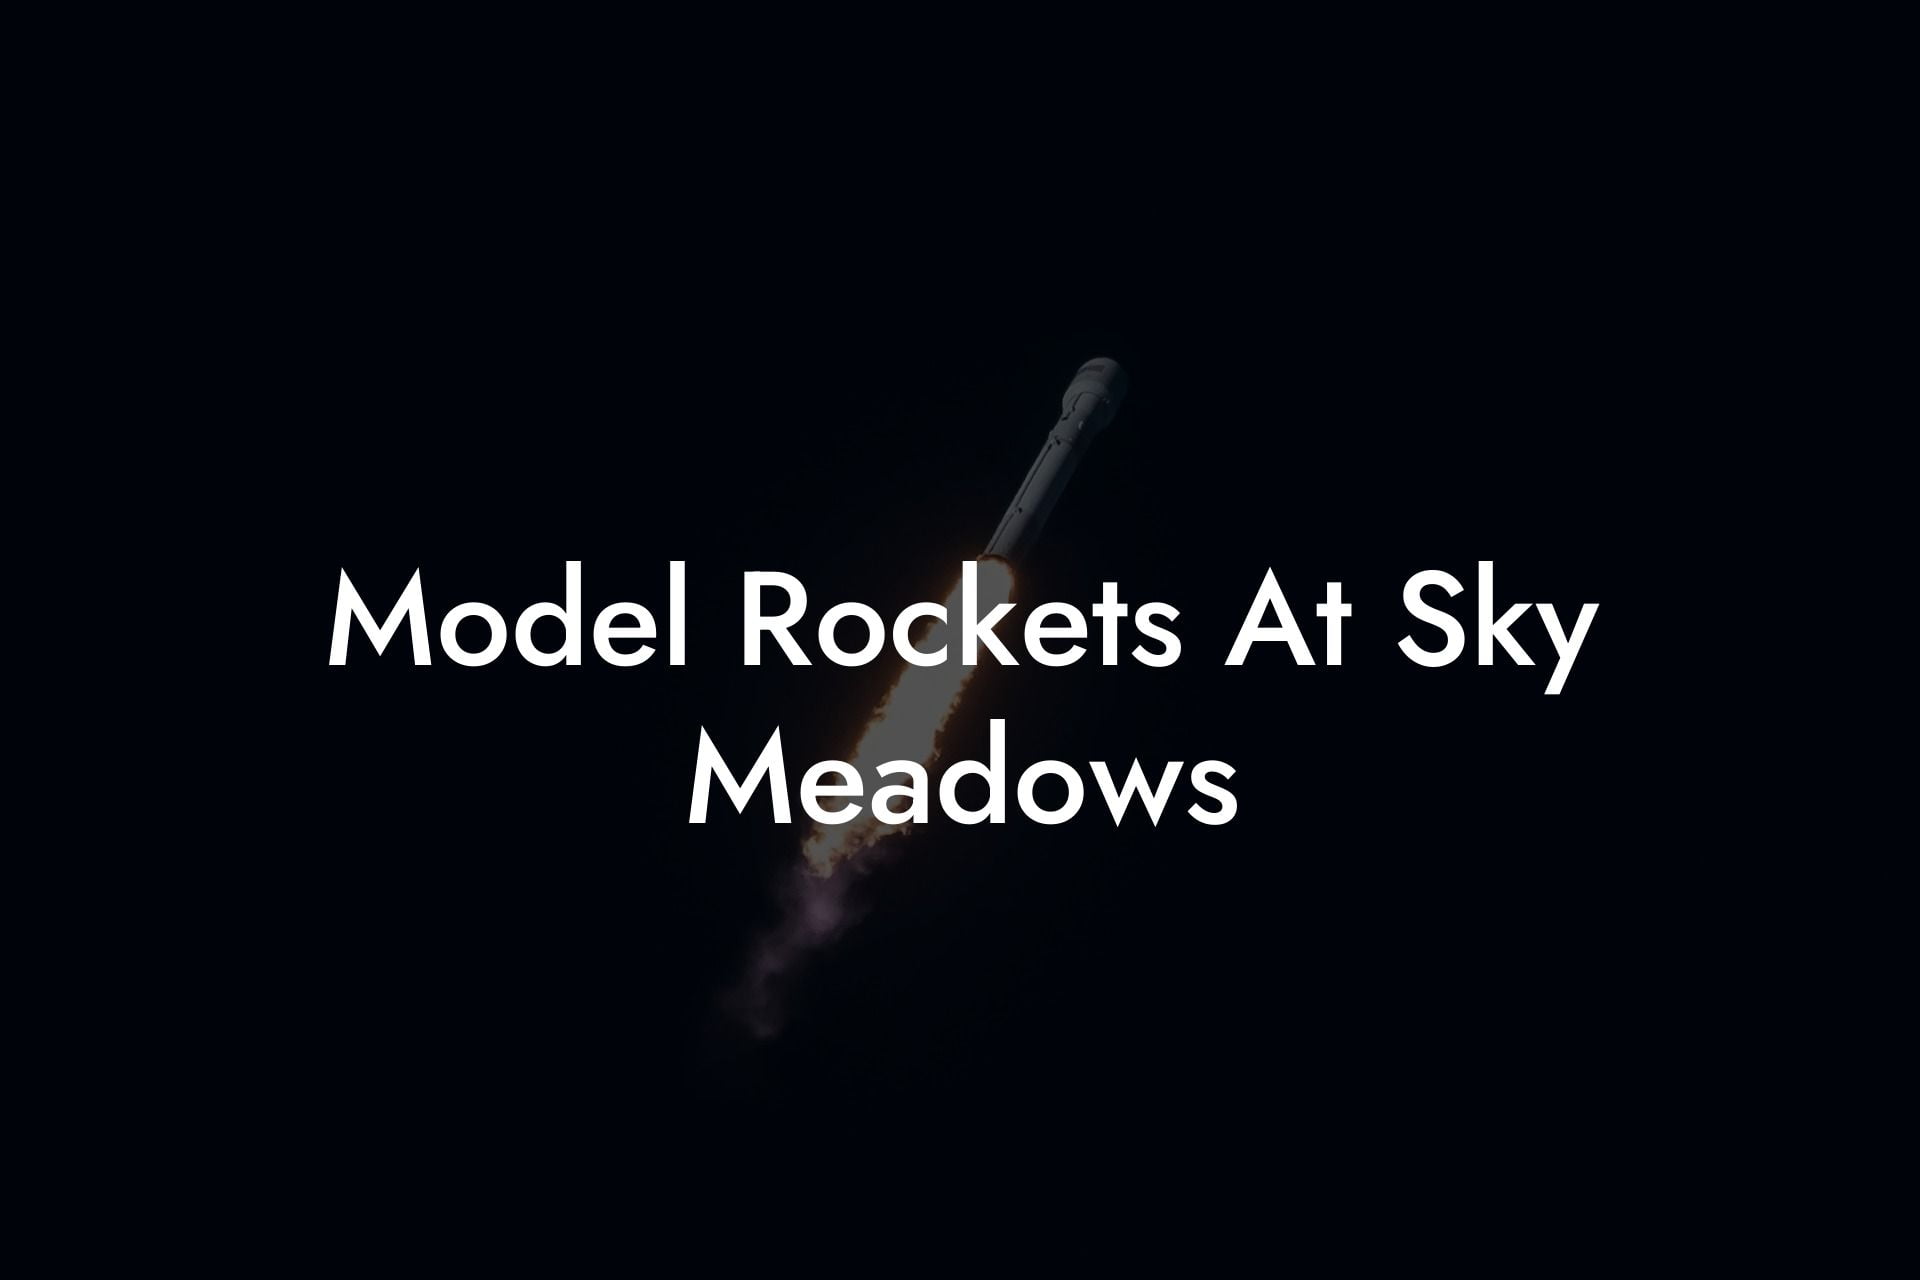 Model Rockets At Sky Meadows